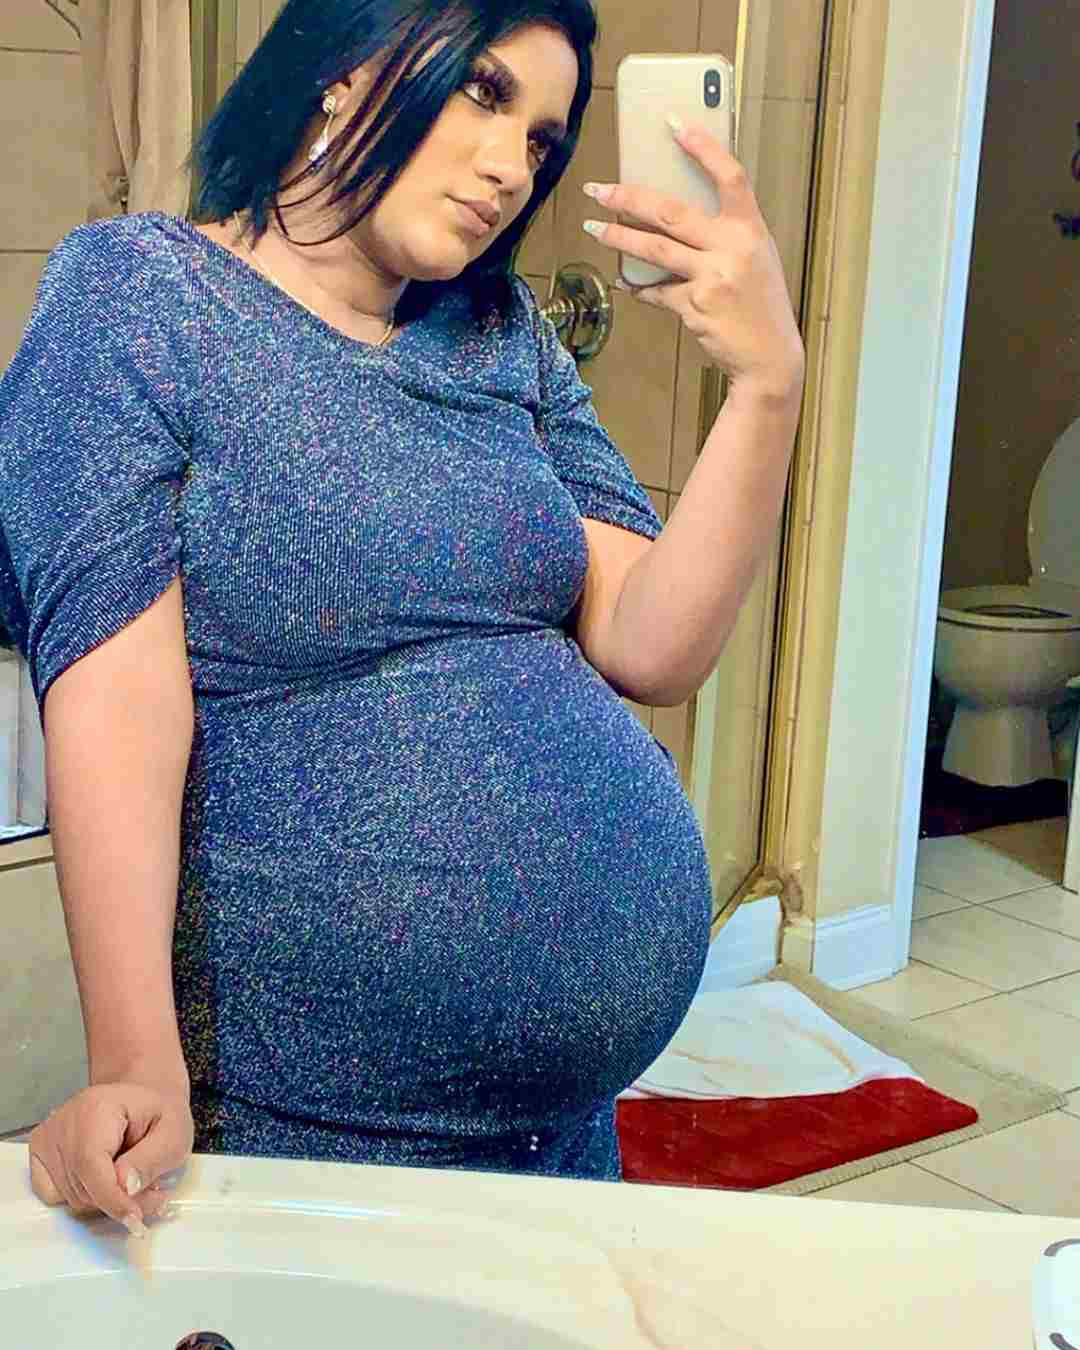 Photo of her baby bump